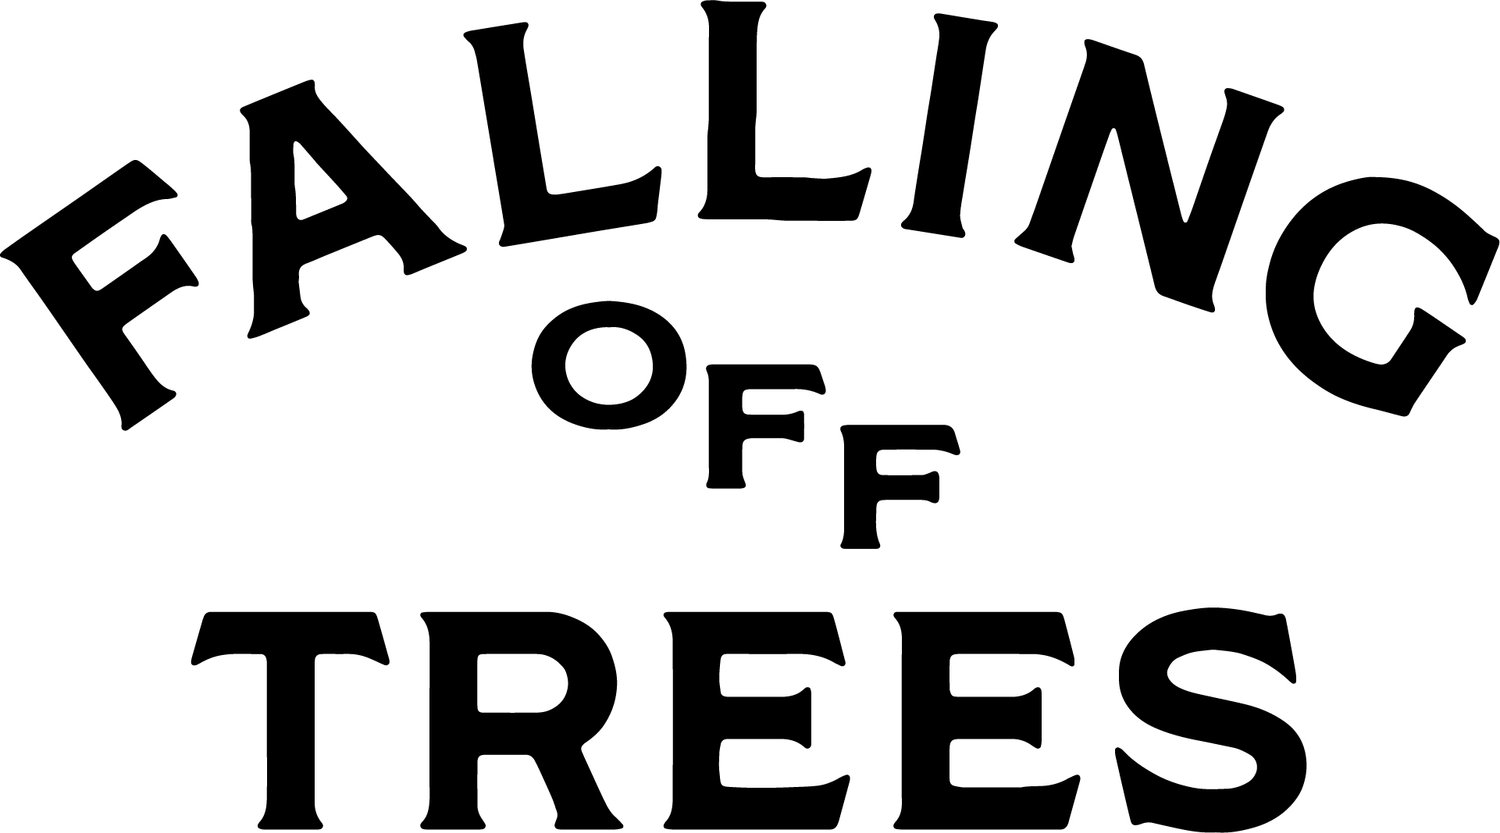 Falling Off Trees